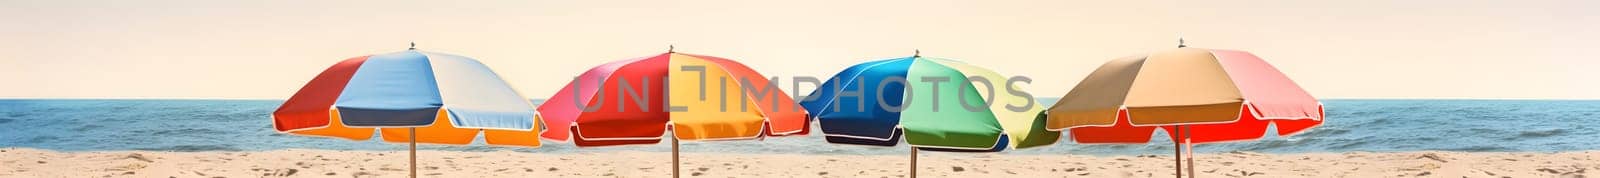 Beach umbrellas on the sand beach - summer vacation theme header, neural network generated art by z1b